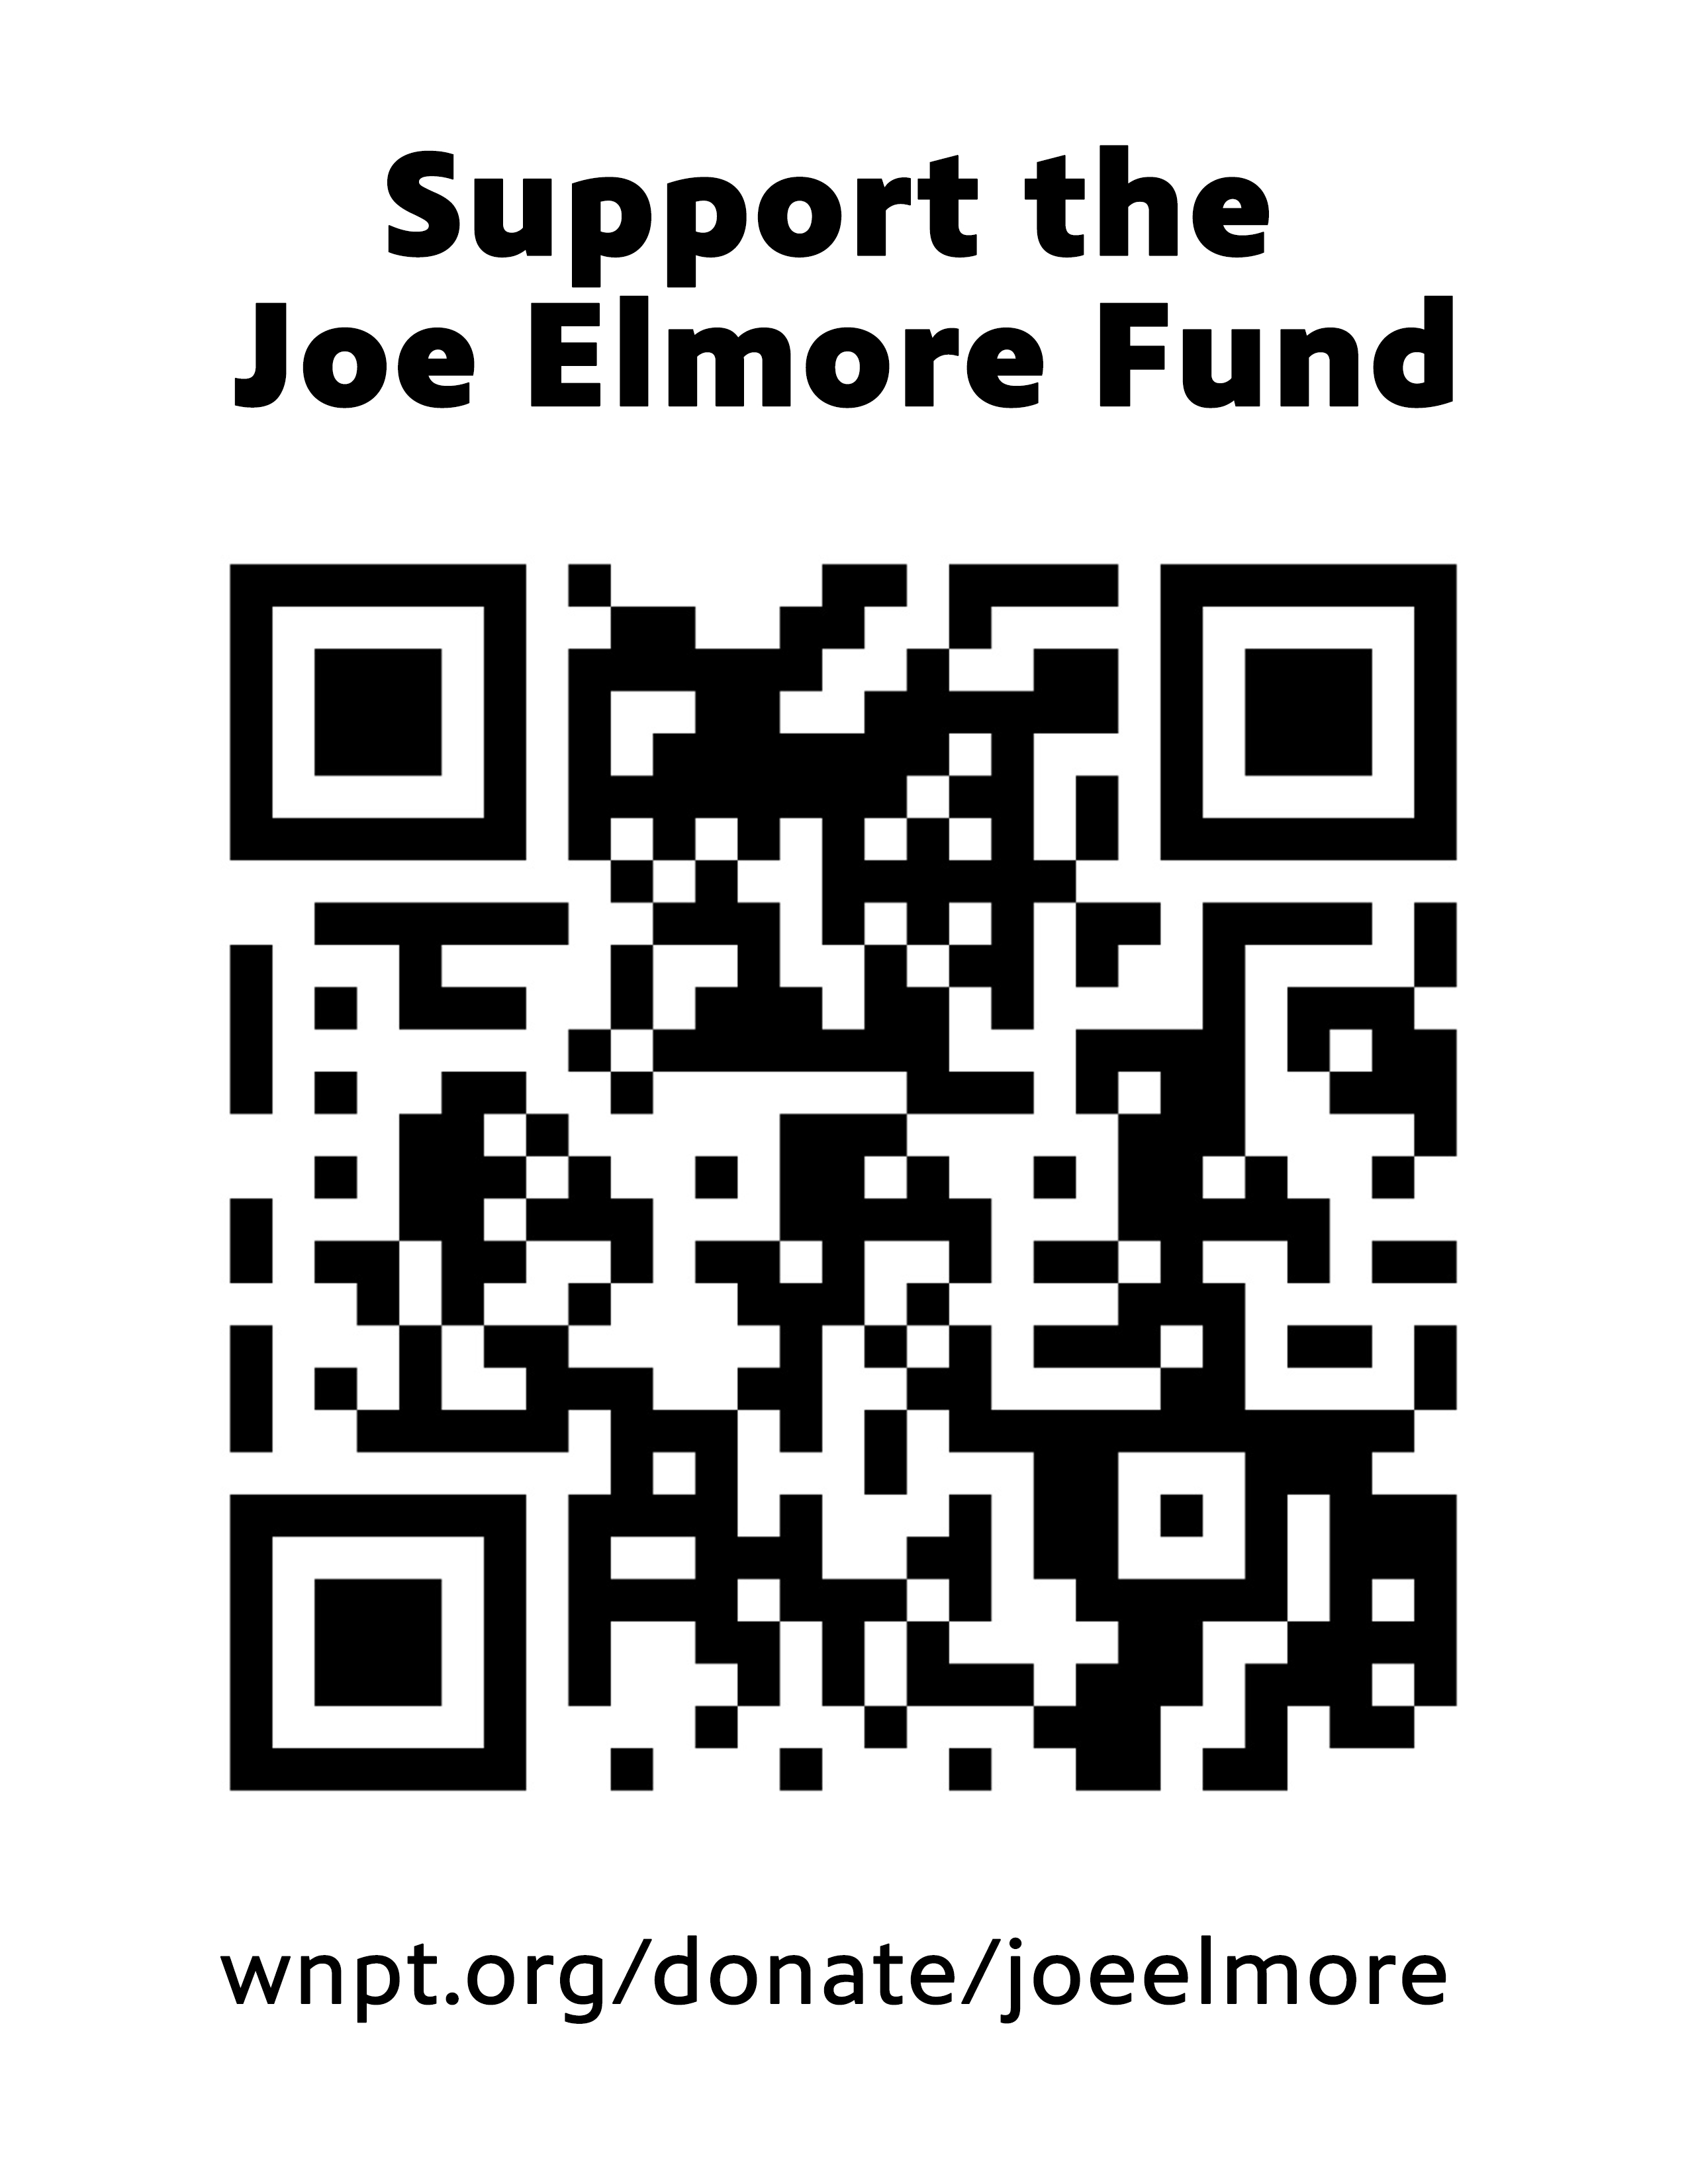 Joe Elmore Fund